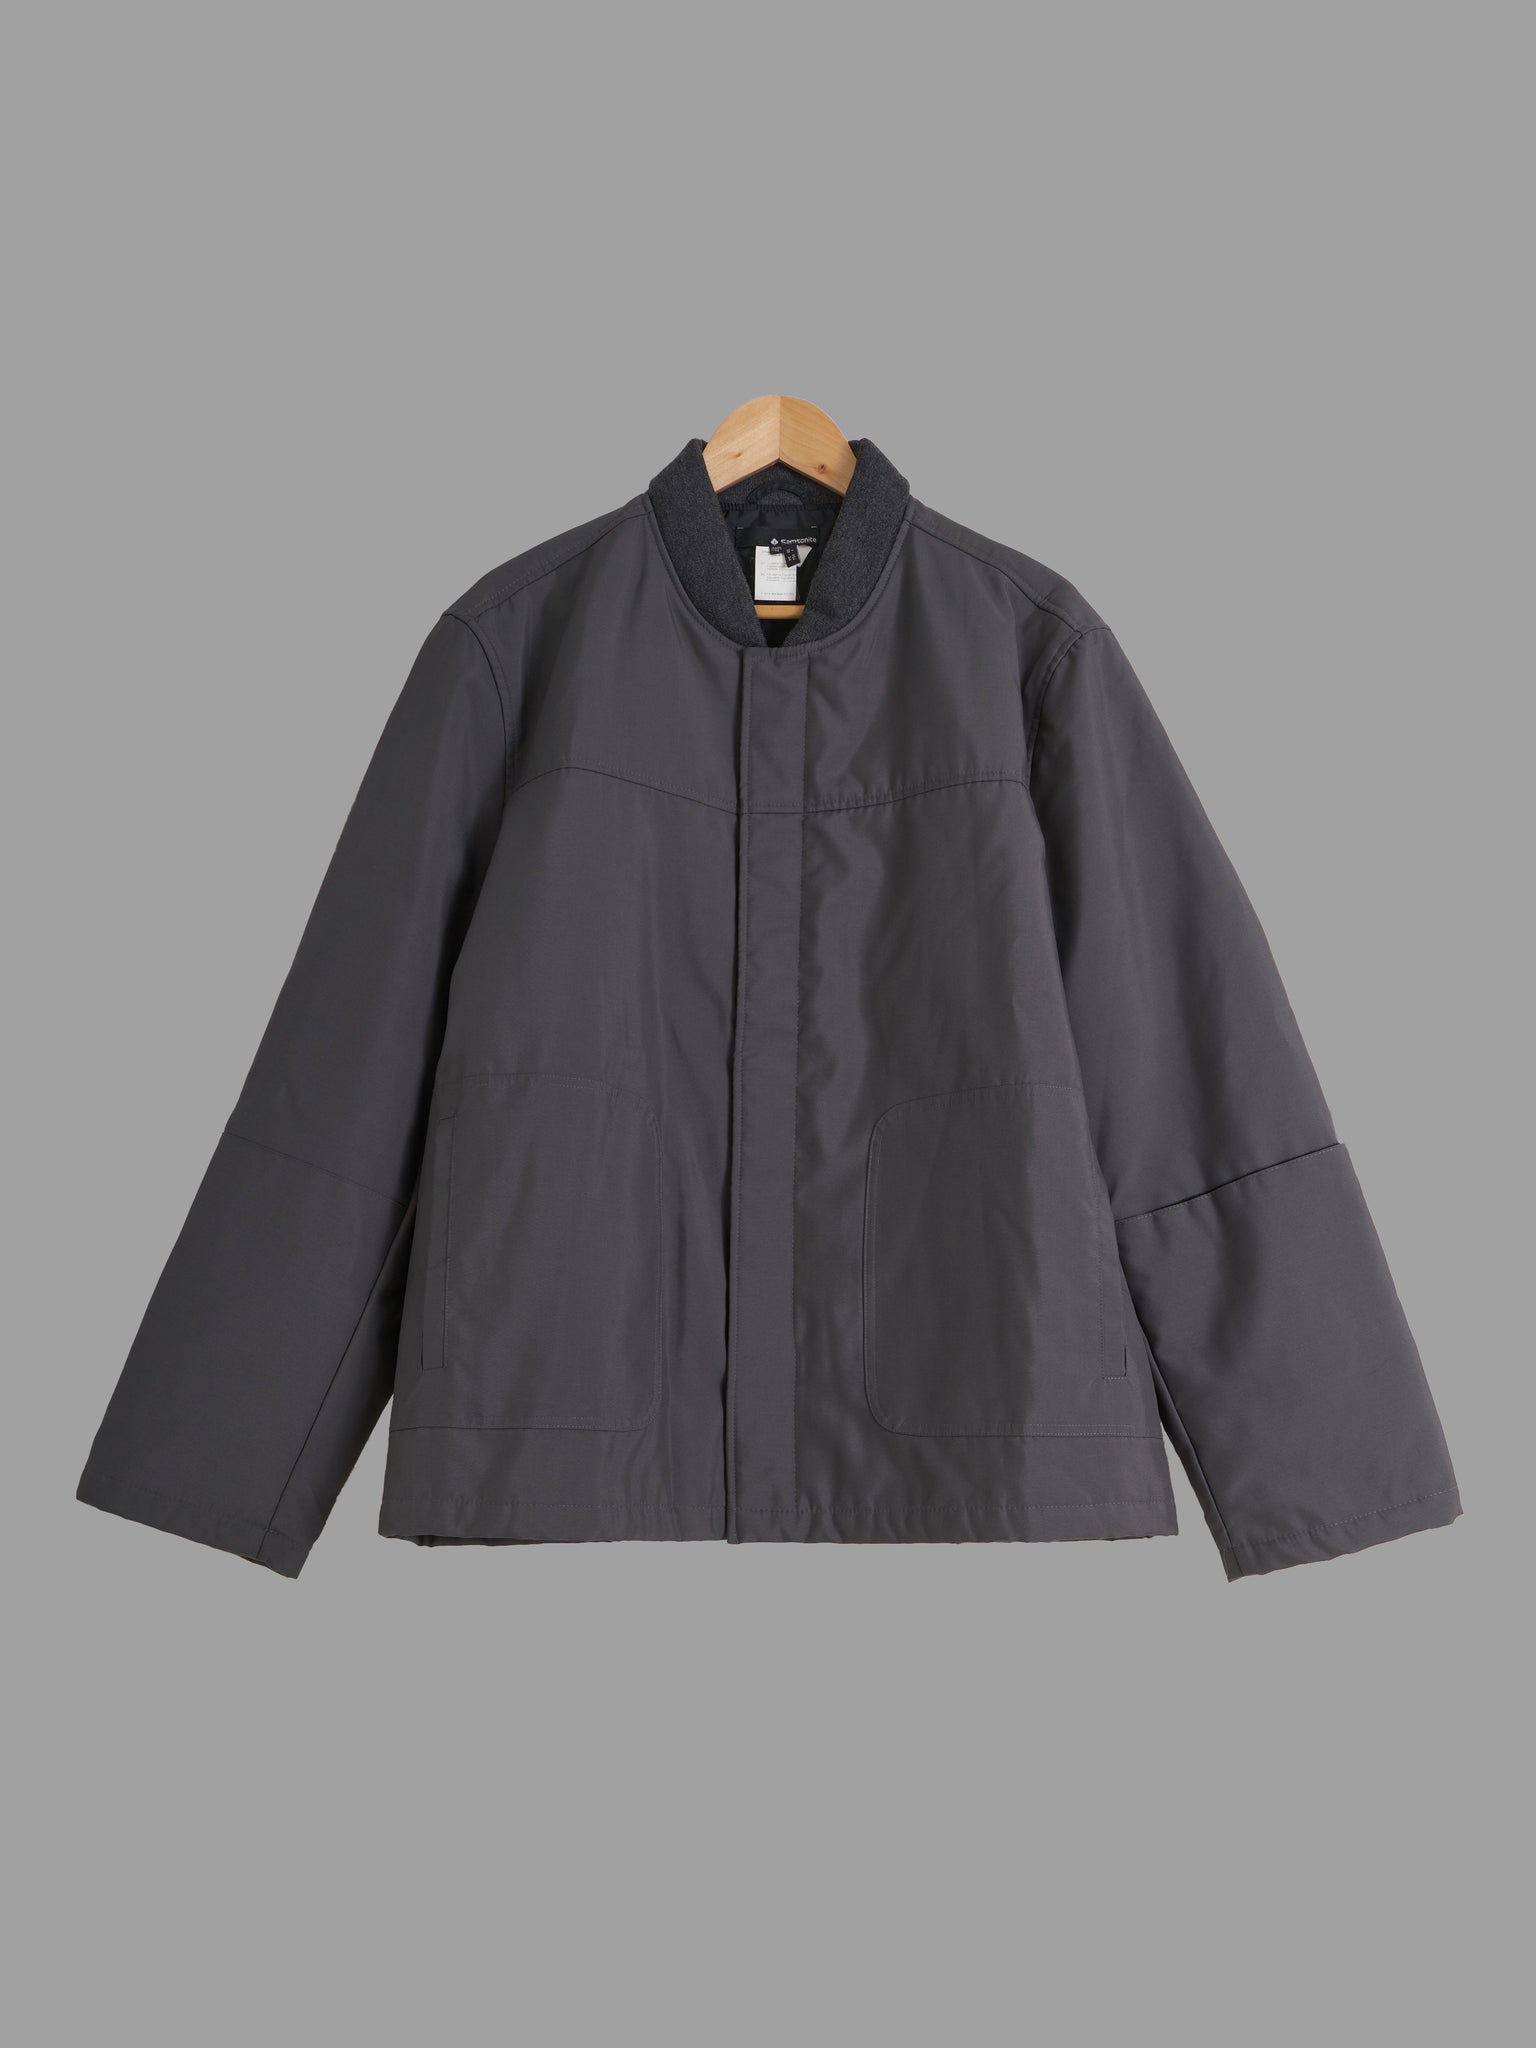 Samsonite grey poly blend padded compass sleeve bomber jacket - size 50